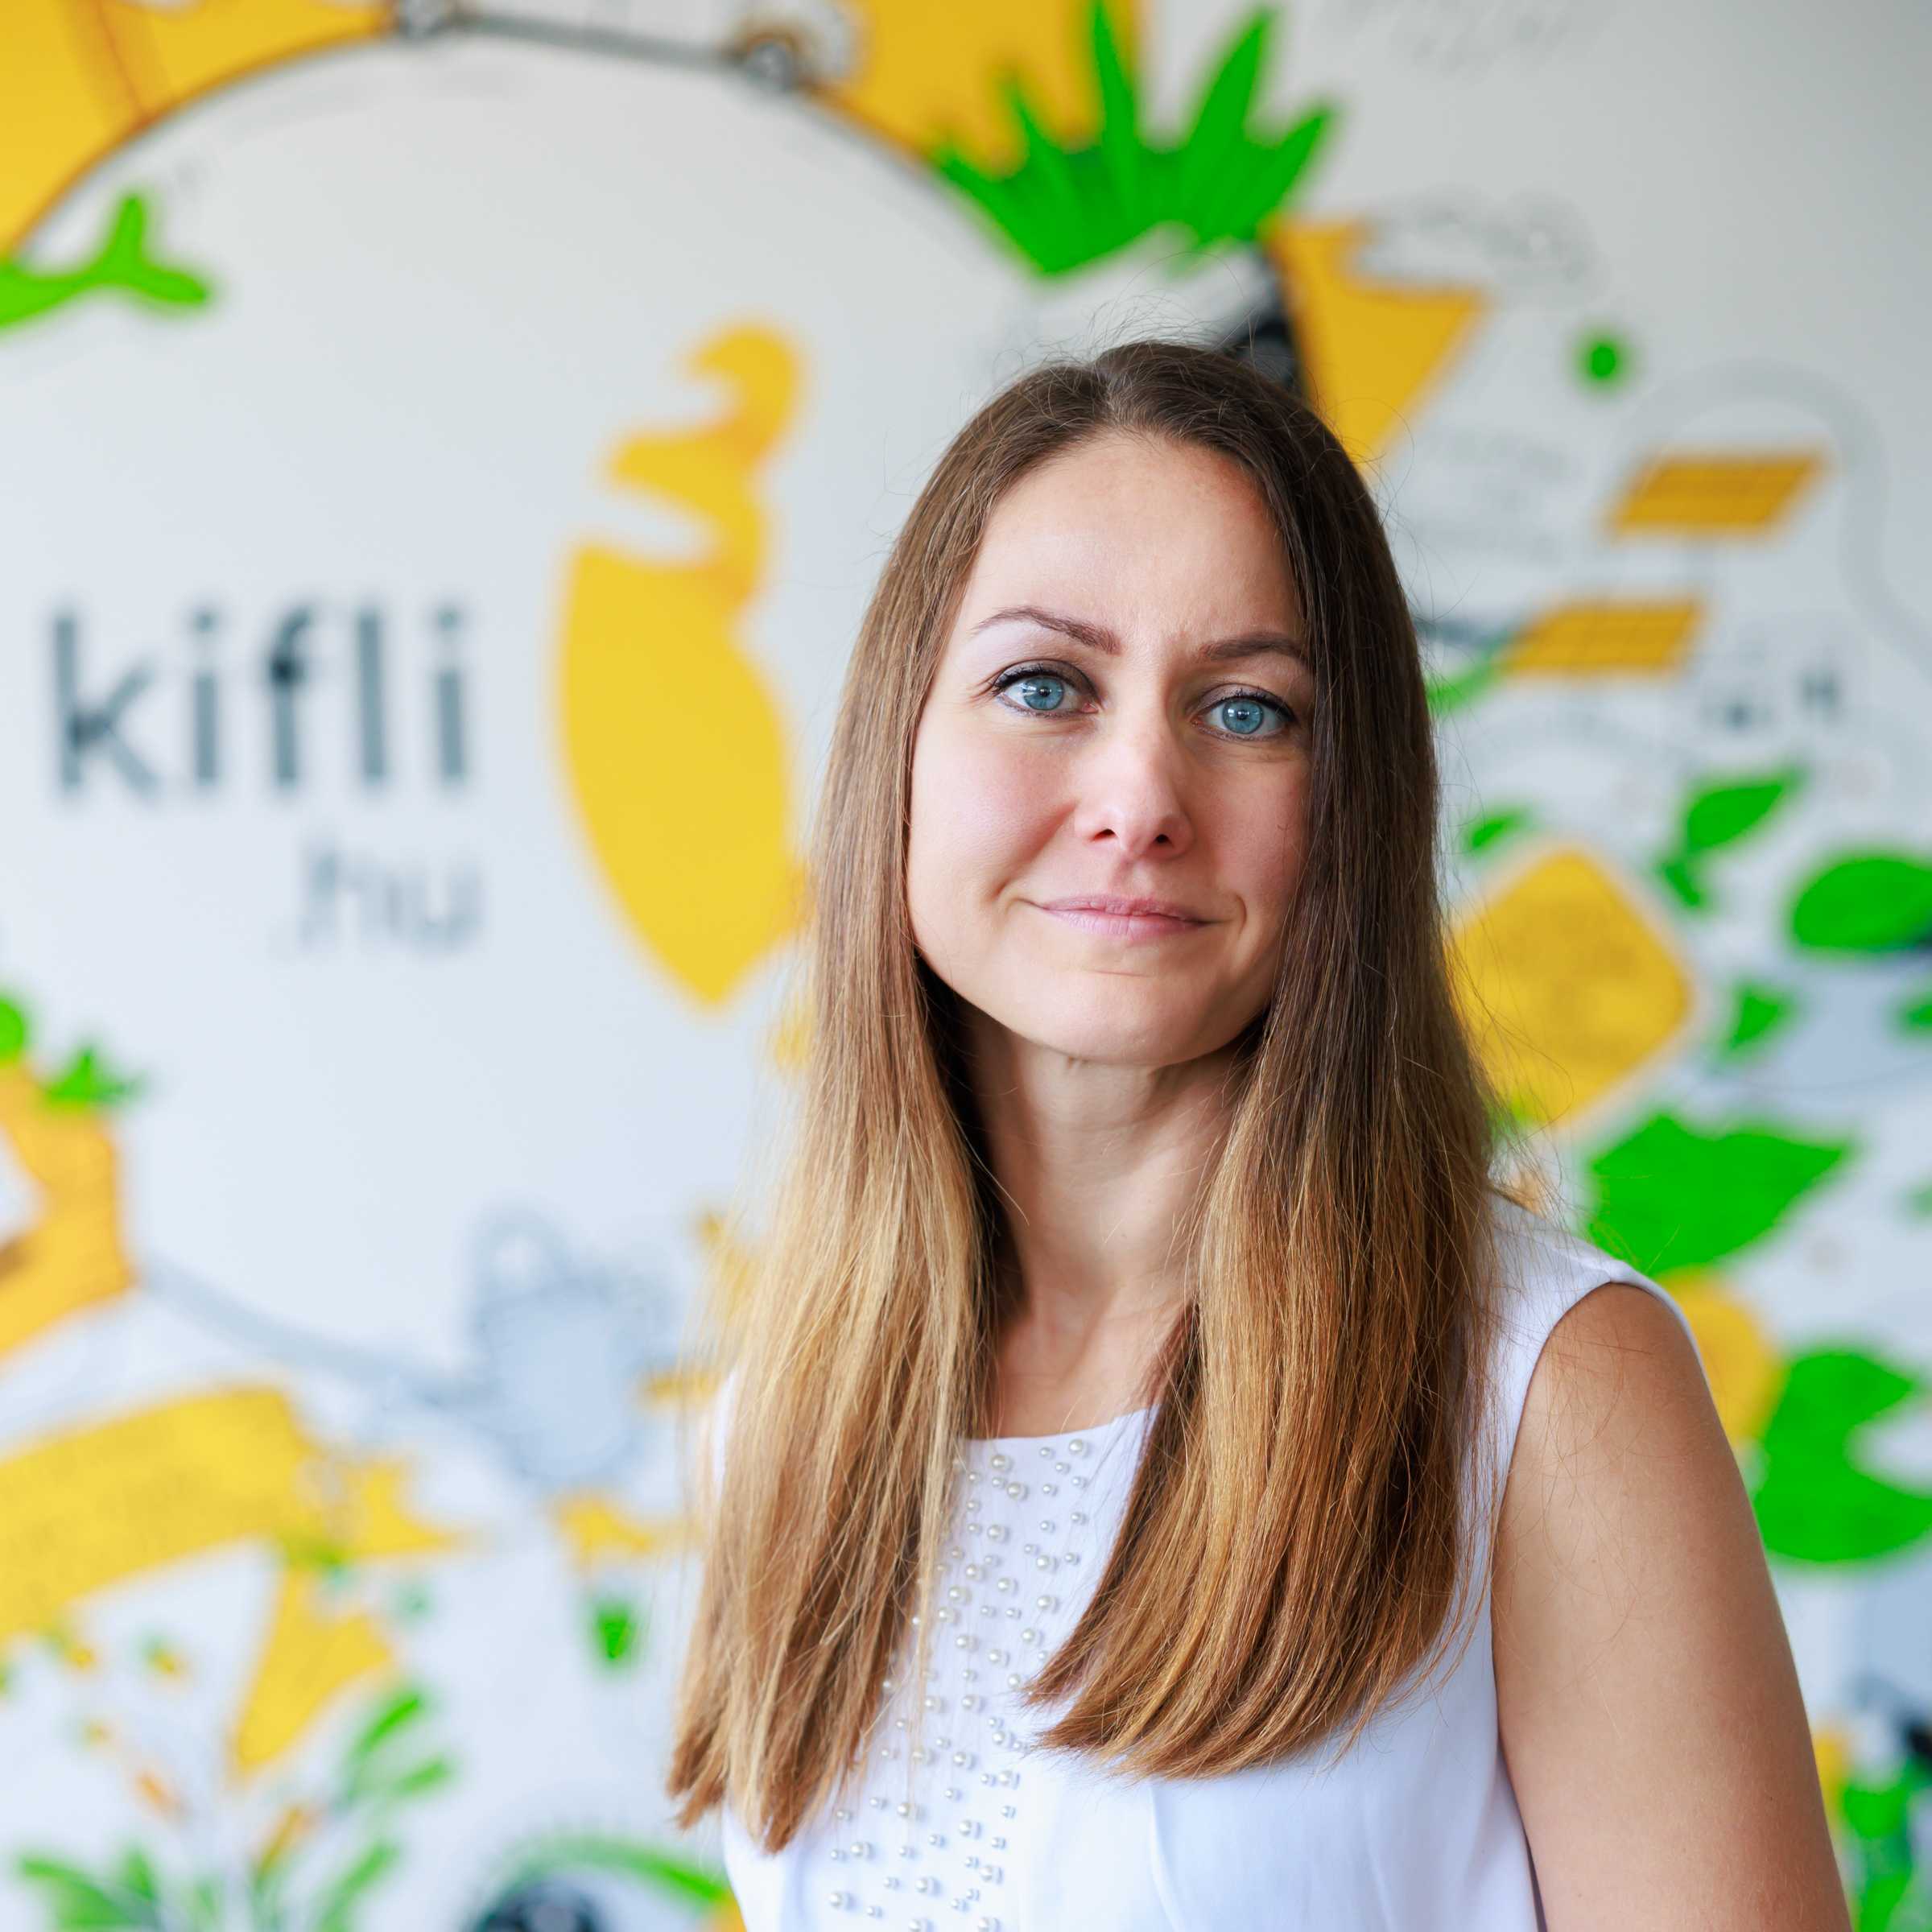 New Marketing Leader Strengthens Kifli.hu Team in Hungary